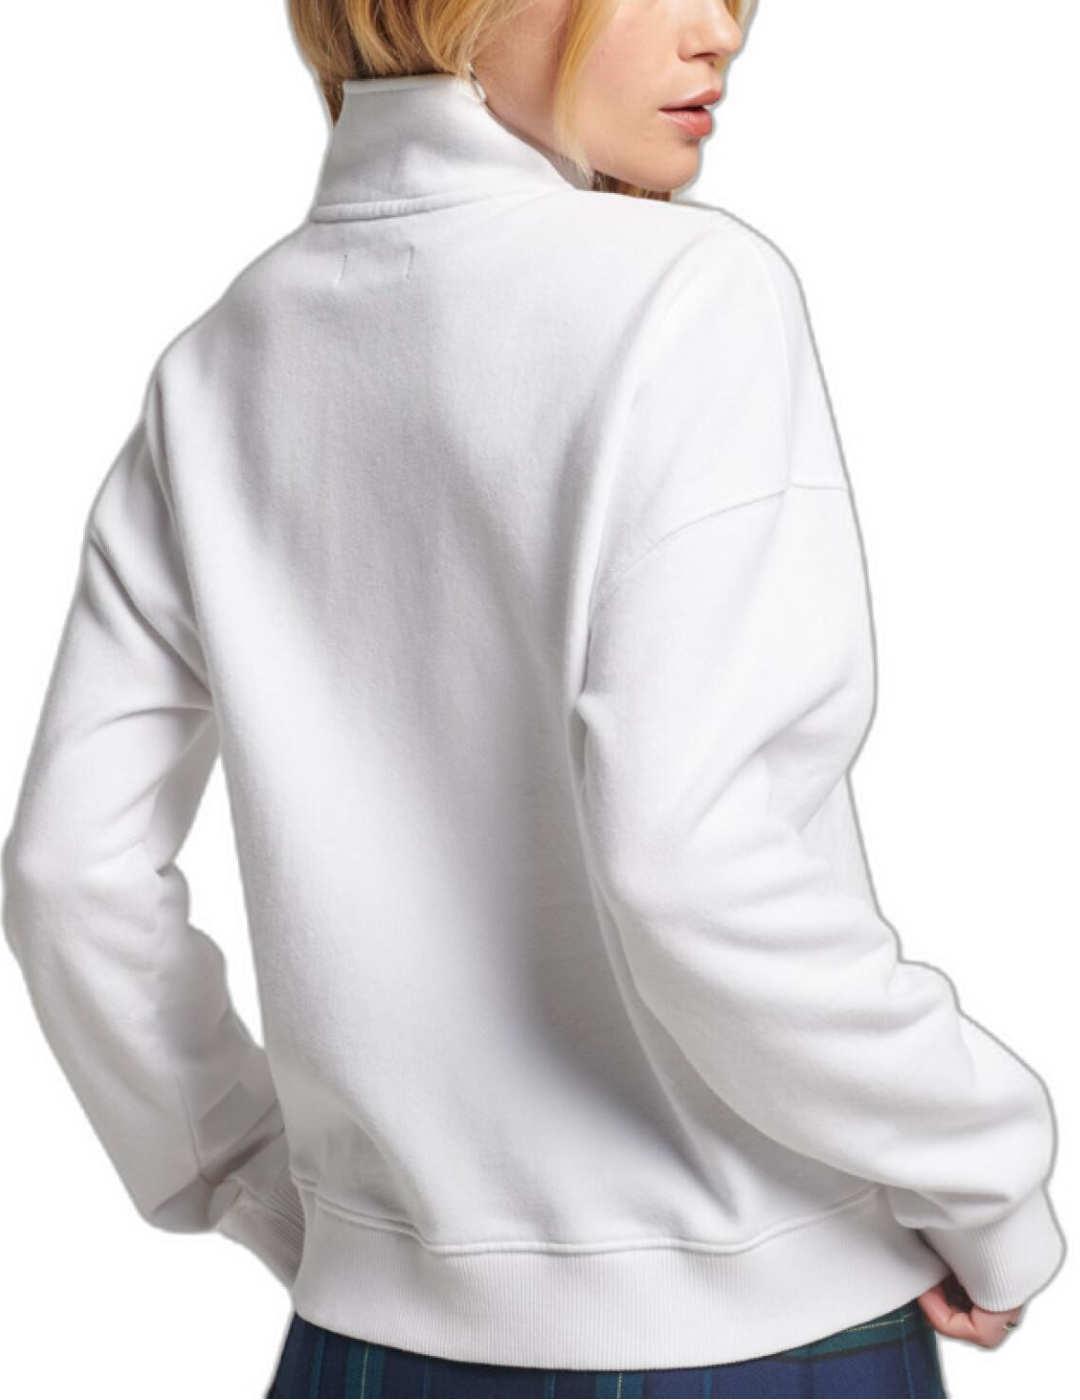 Sudadera Superdry Core sport blanca sin capucha para mujer